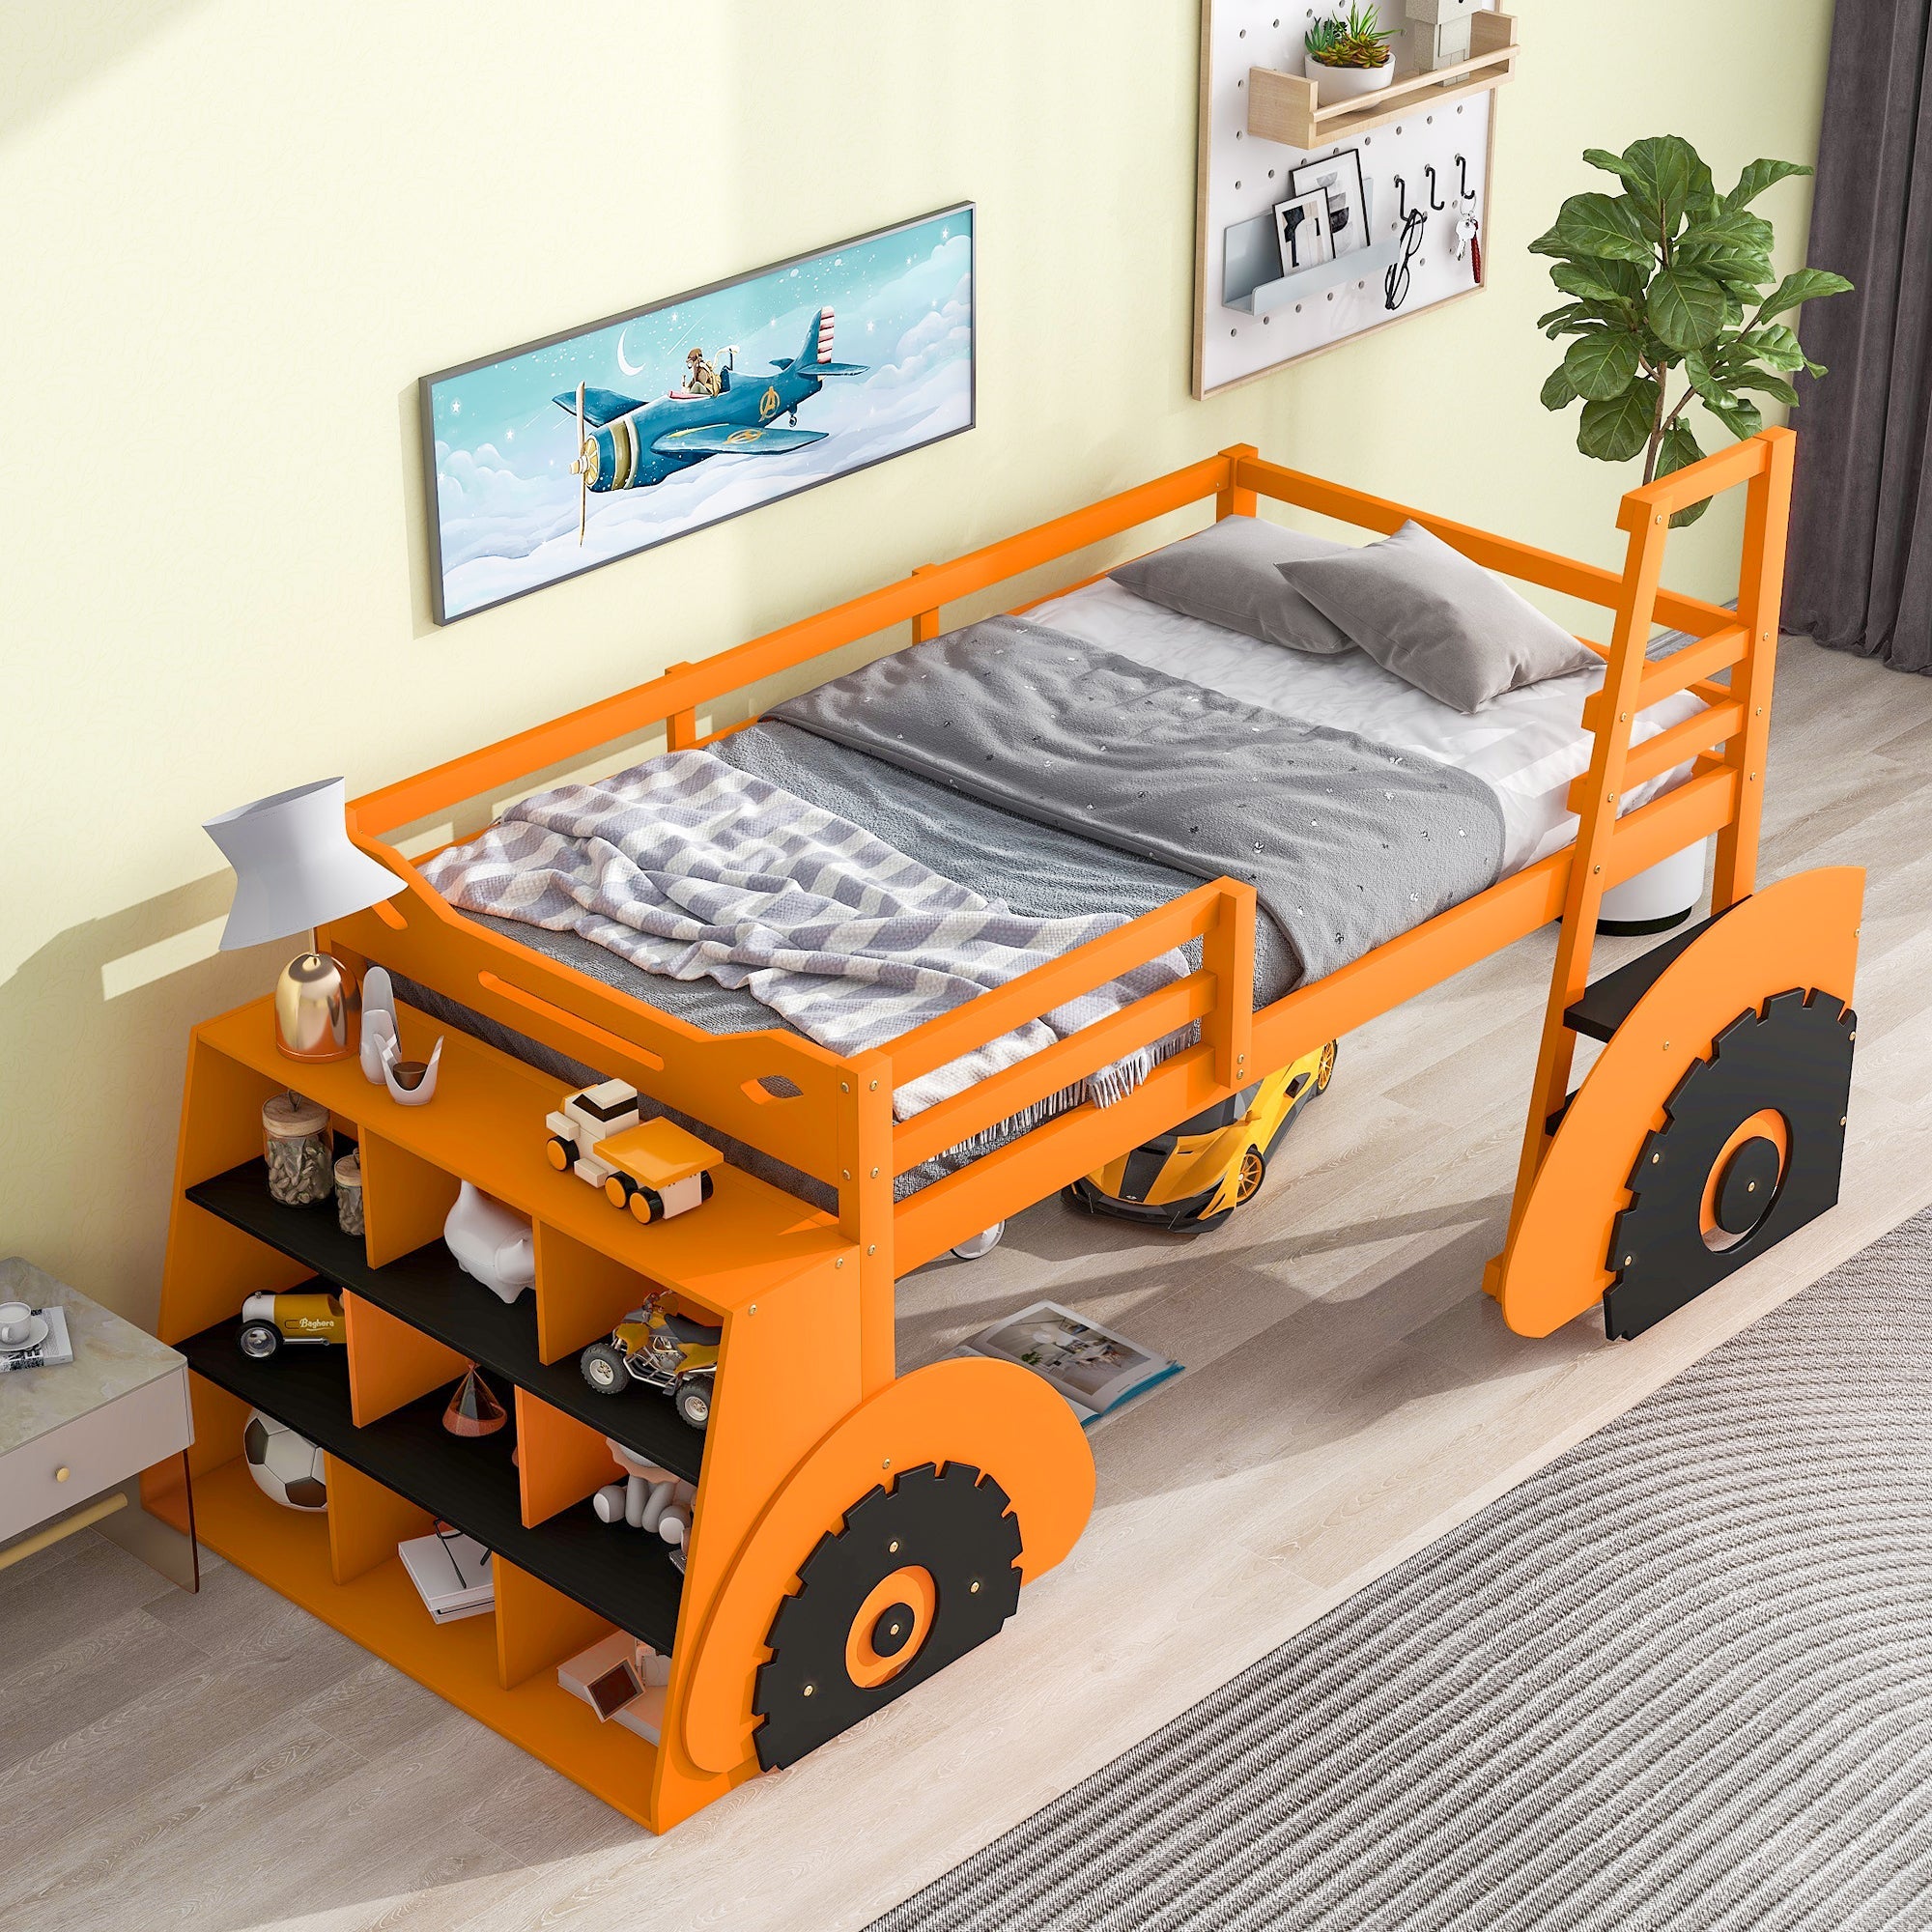 Pine Wood Car-Shaped Low Loft Bed with Shelf for Kids Bedroom, Orange